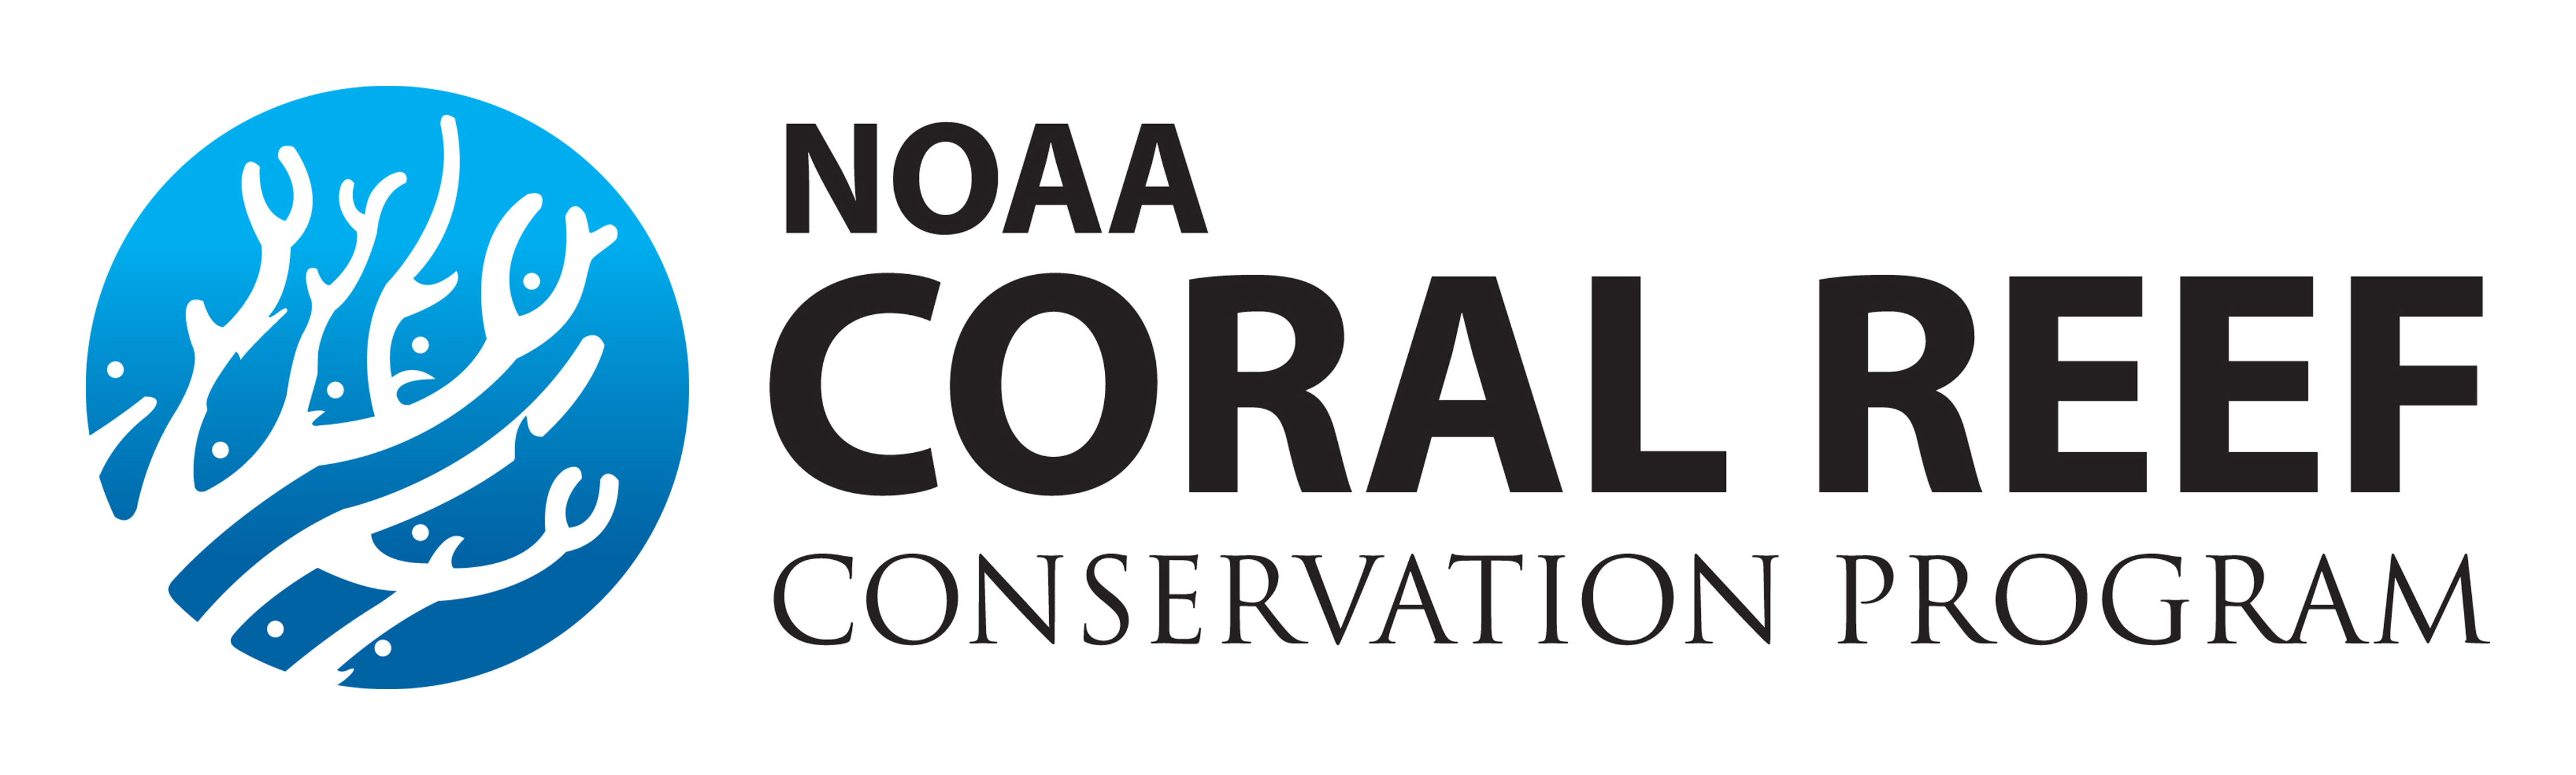 NOAA Coral Reef Conservation Program graphic identifier